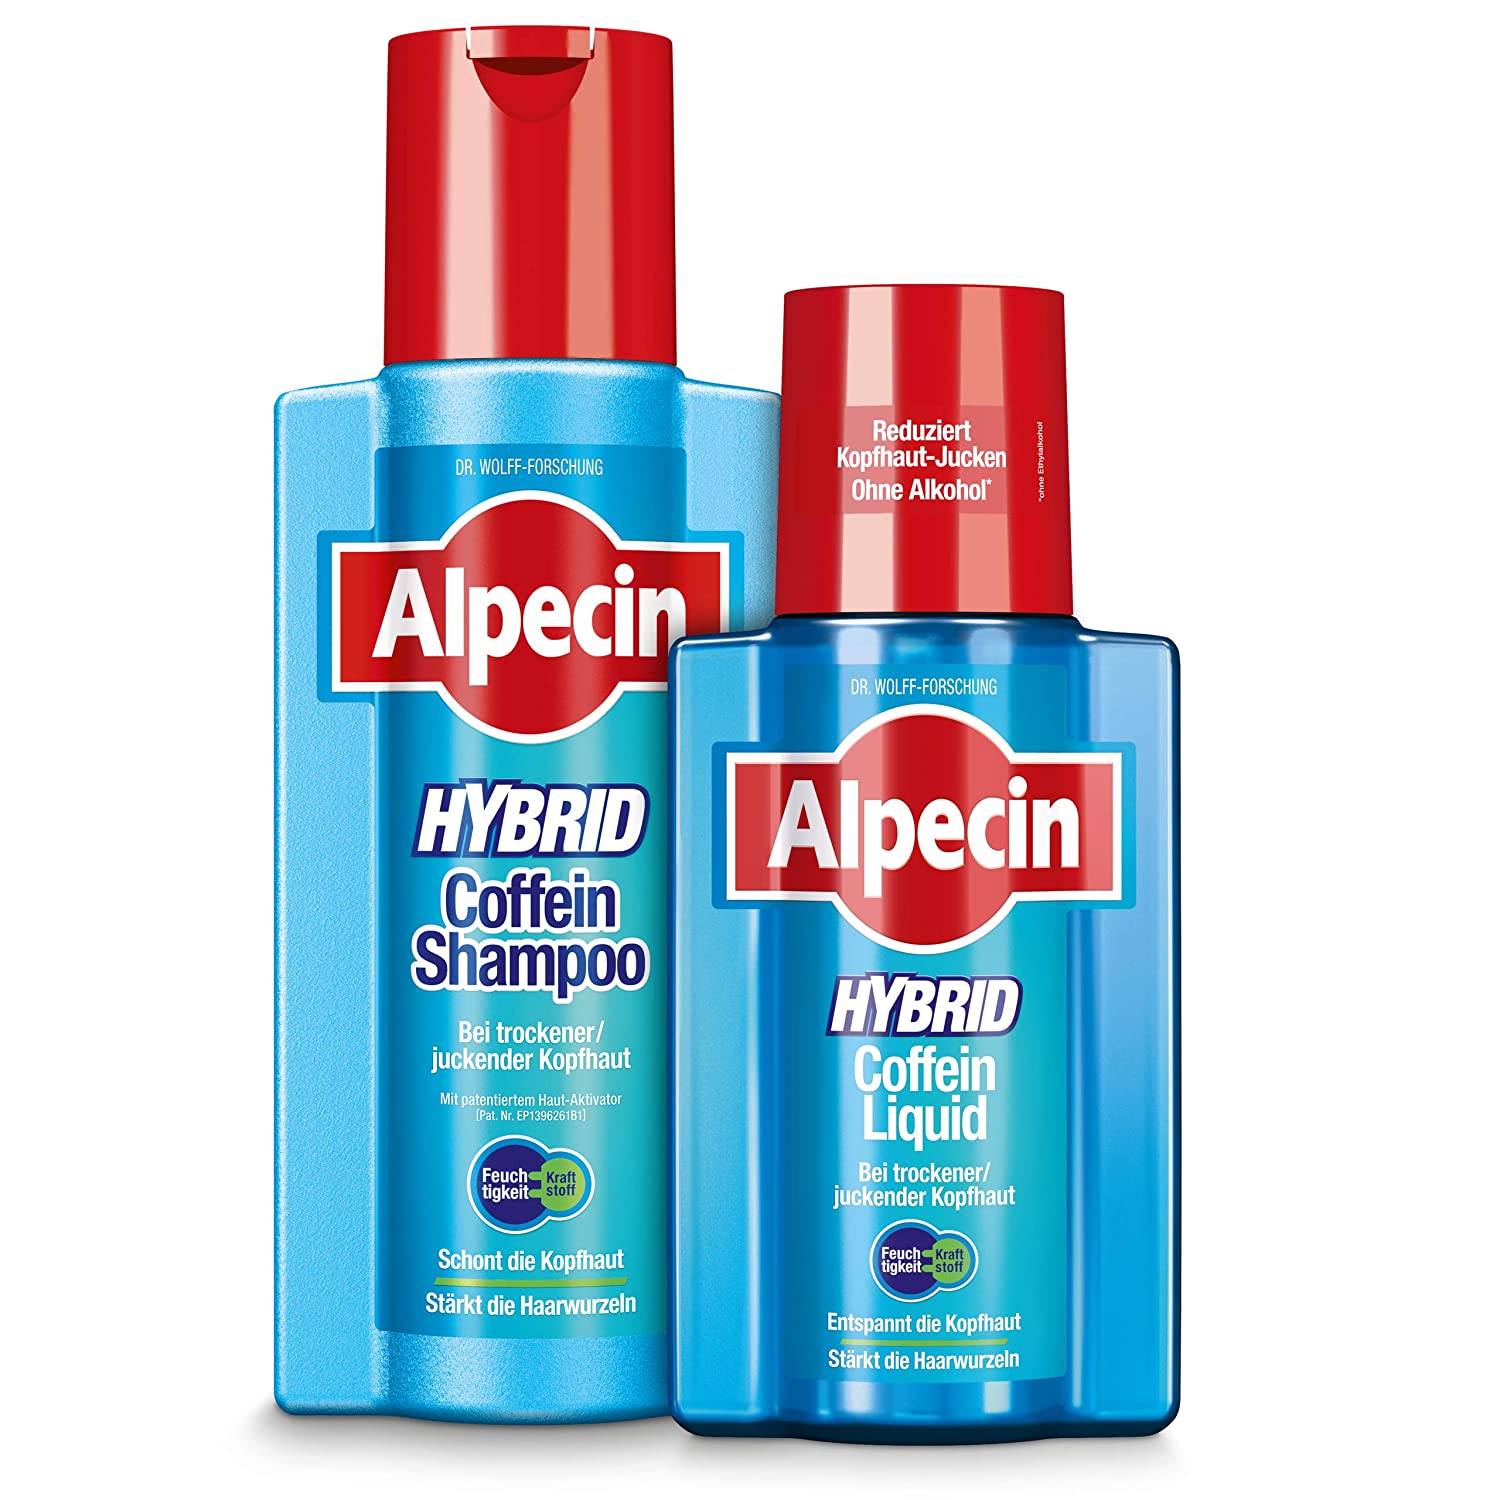 Alpecin Hybrid Caffeine Shampoo & Hybrid Caffeine Liquid Set - 1 x 250ml + 1 x 200ml - Moisturising Hair Shampoo for Men for Dry/Itchy Scalp